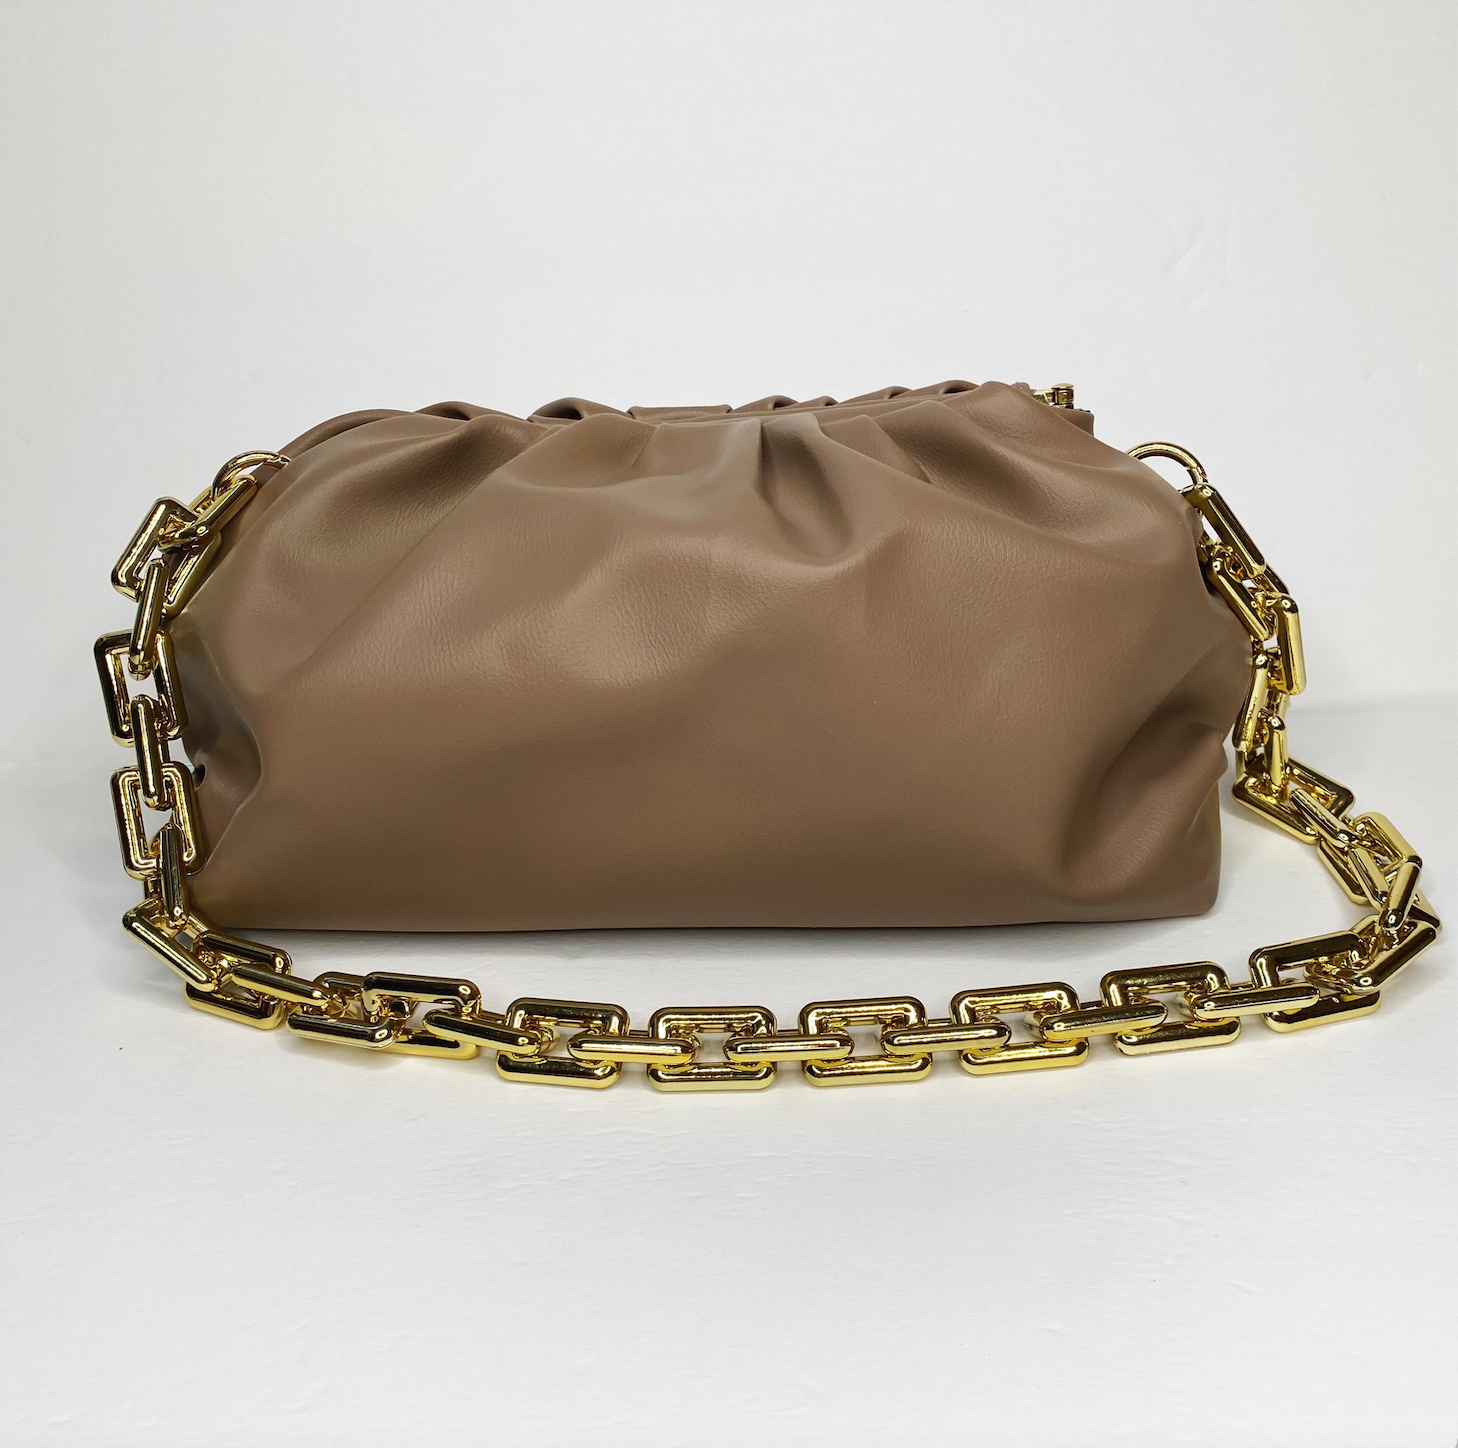 Felicia Tan Leather Pouch Handbag